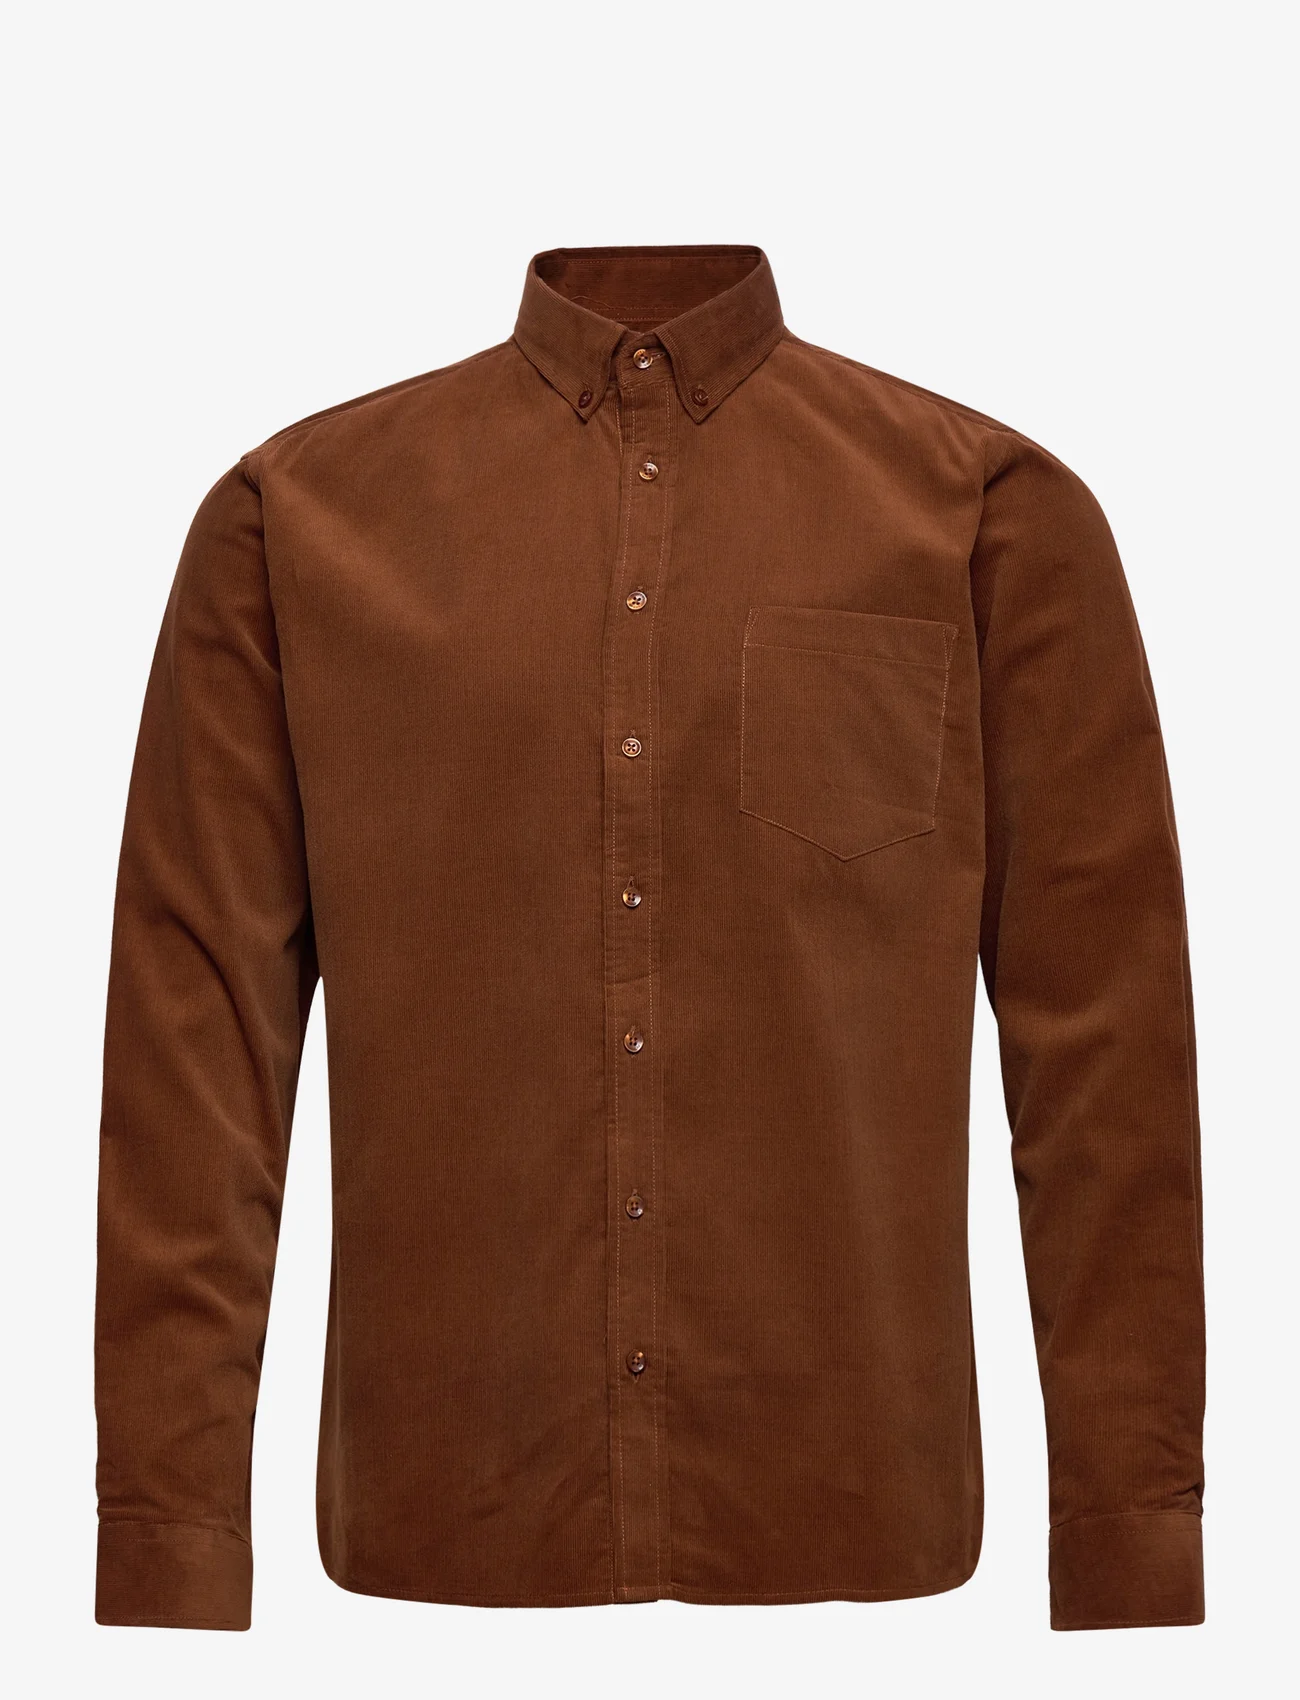 Urban Pioneers - Obama Shirt - corduroy overhemden - rust - 0